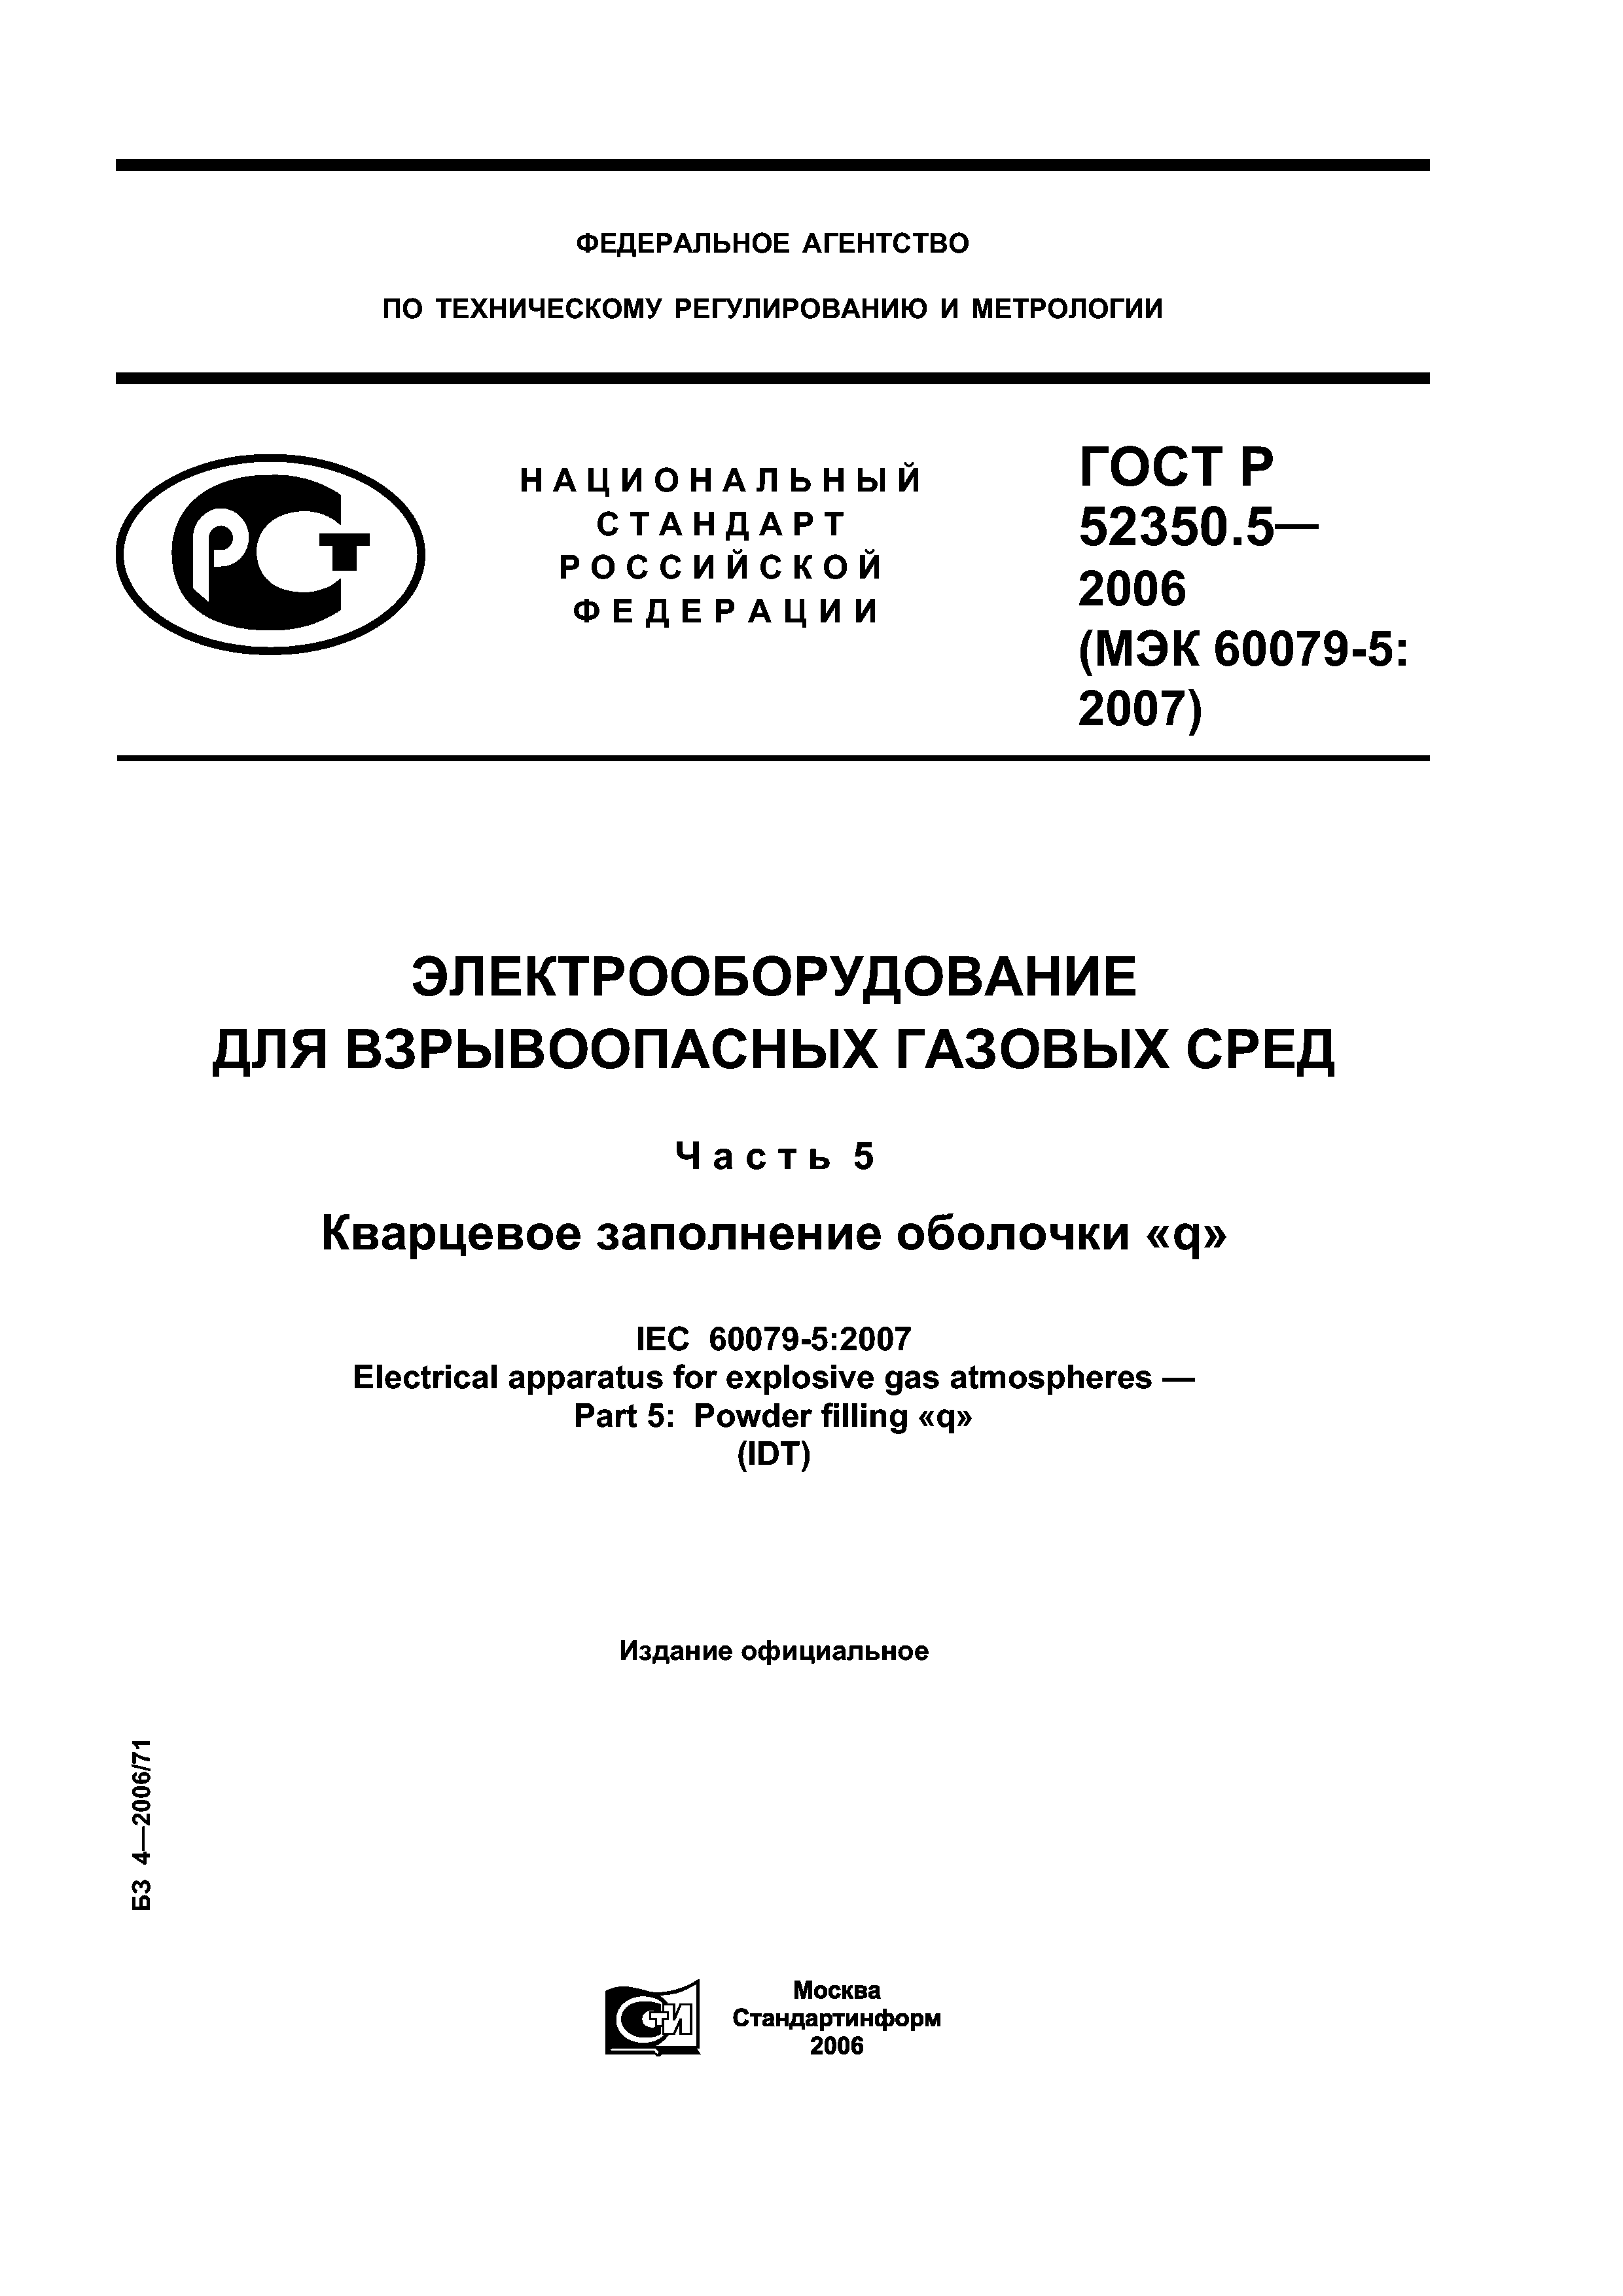 ГОСТ Р 52350.5-2006